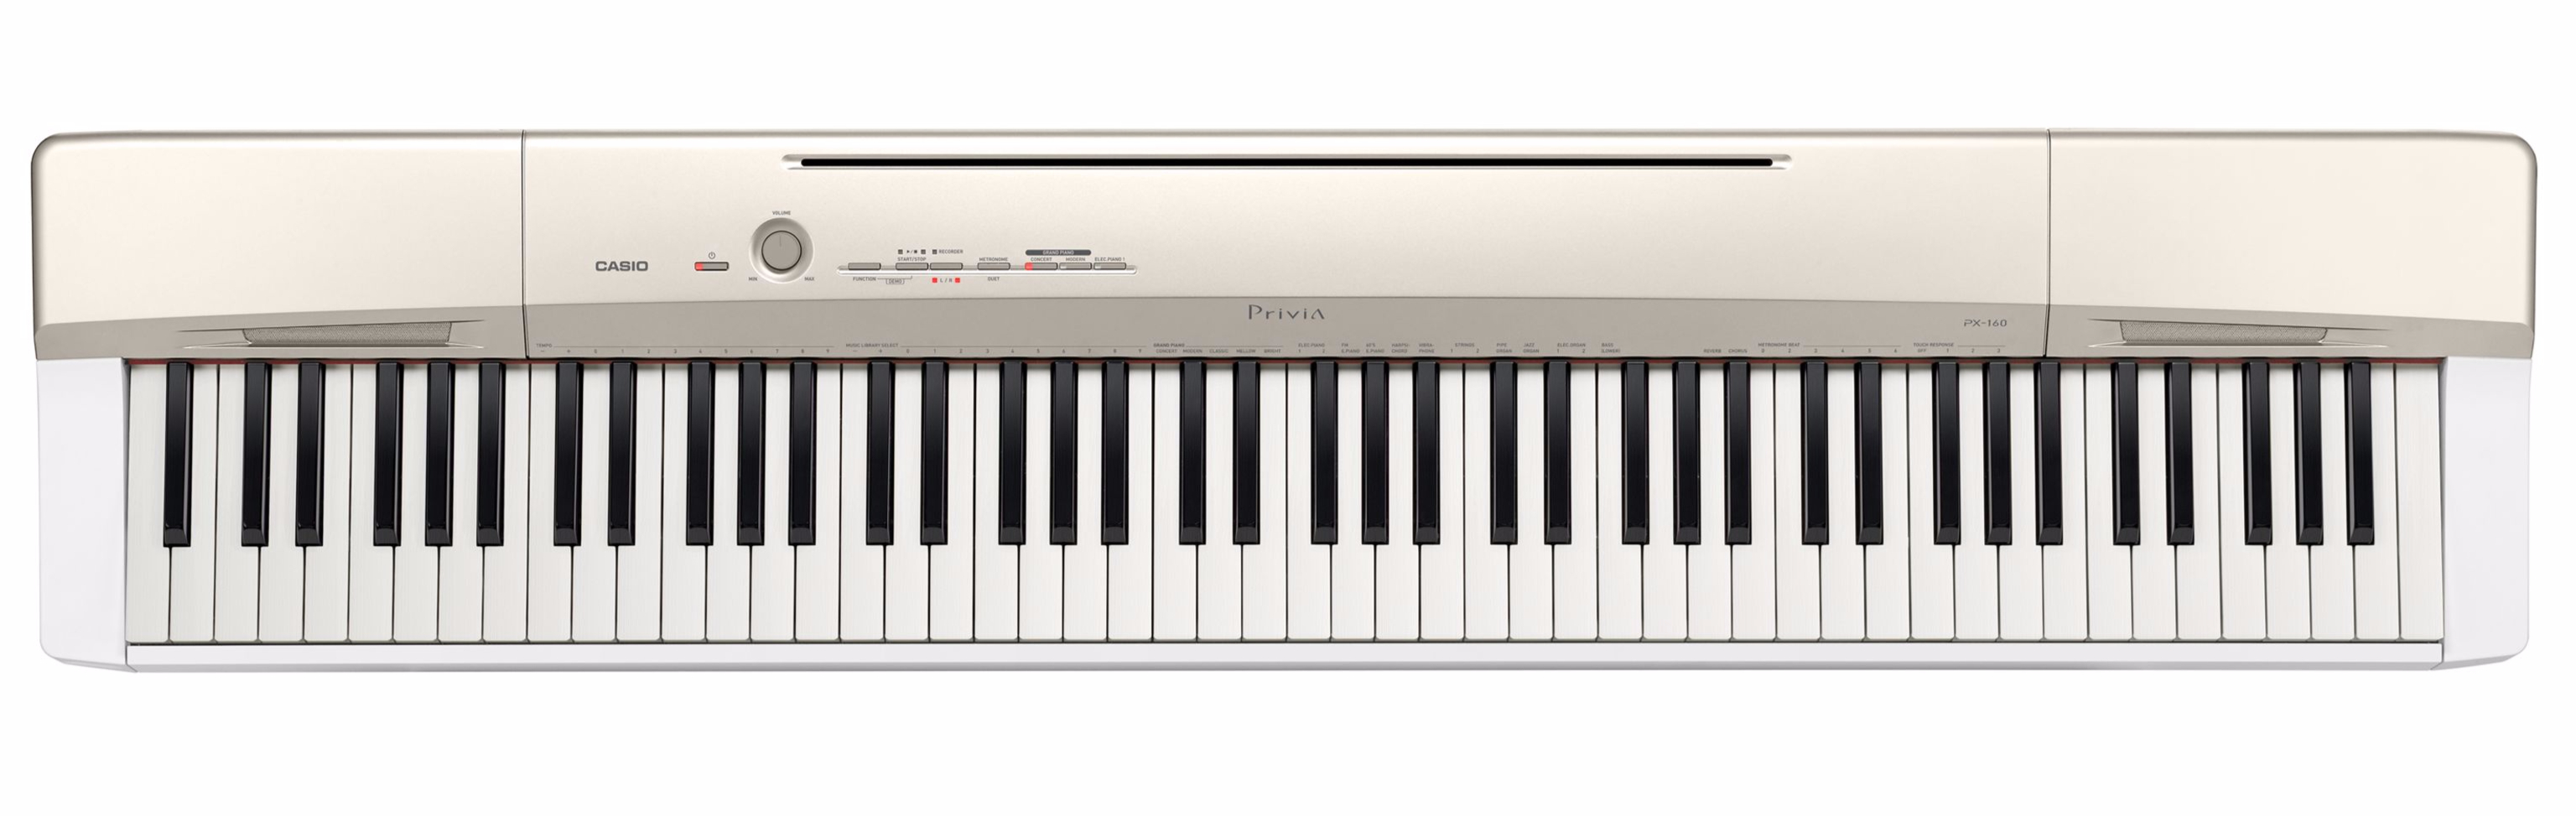 Casio Privia PX 160 GD Piano digital | MUSIC STORE professional